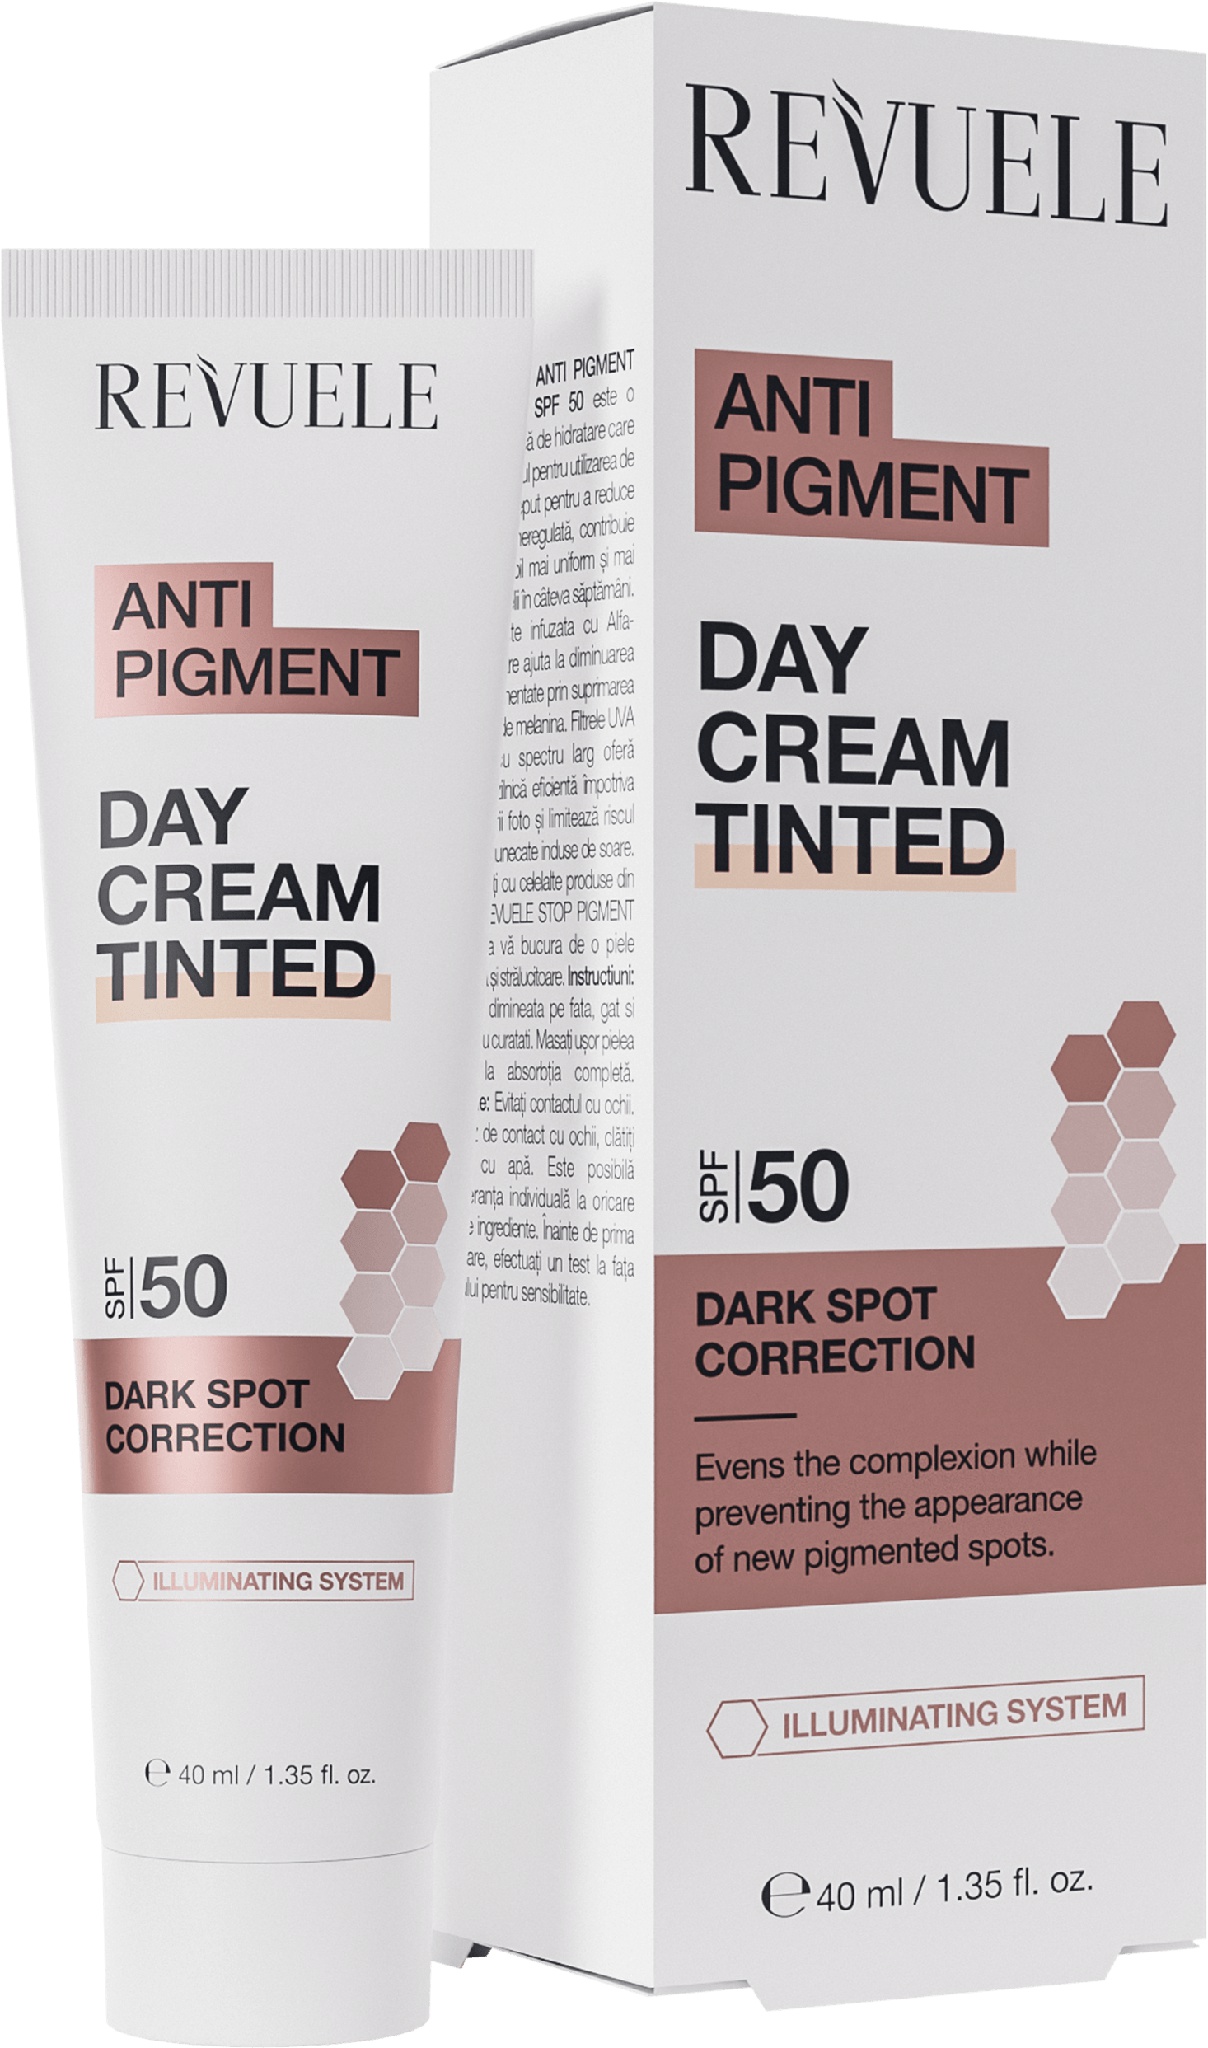 Revuele Anti Pigment Day Cream Tinted SPF 50